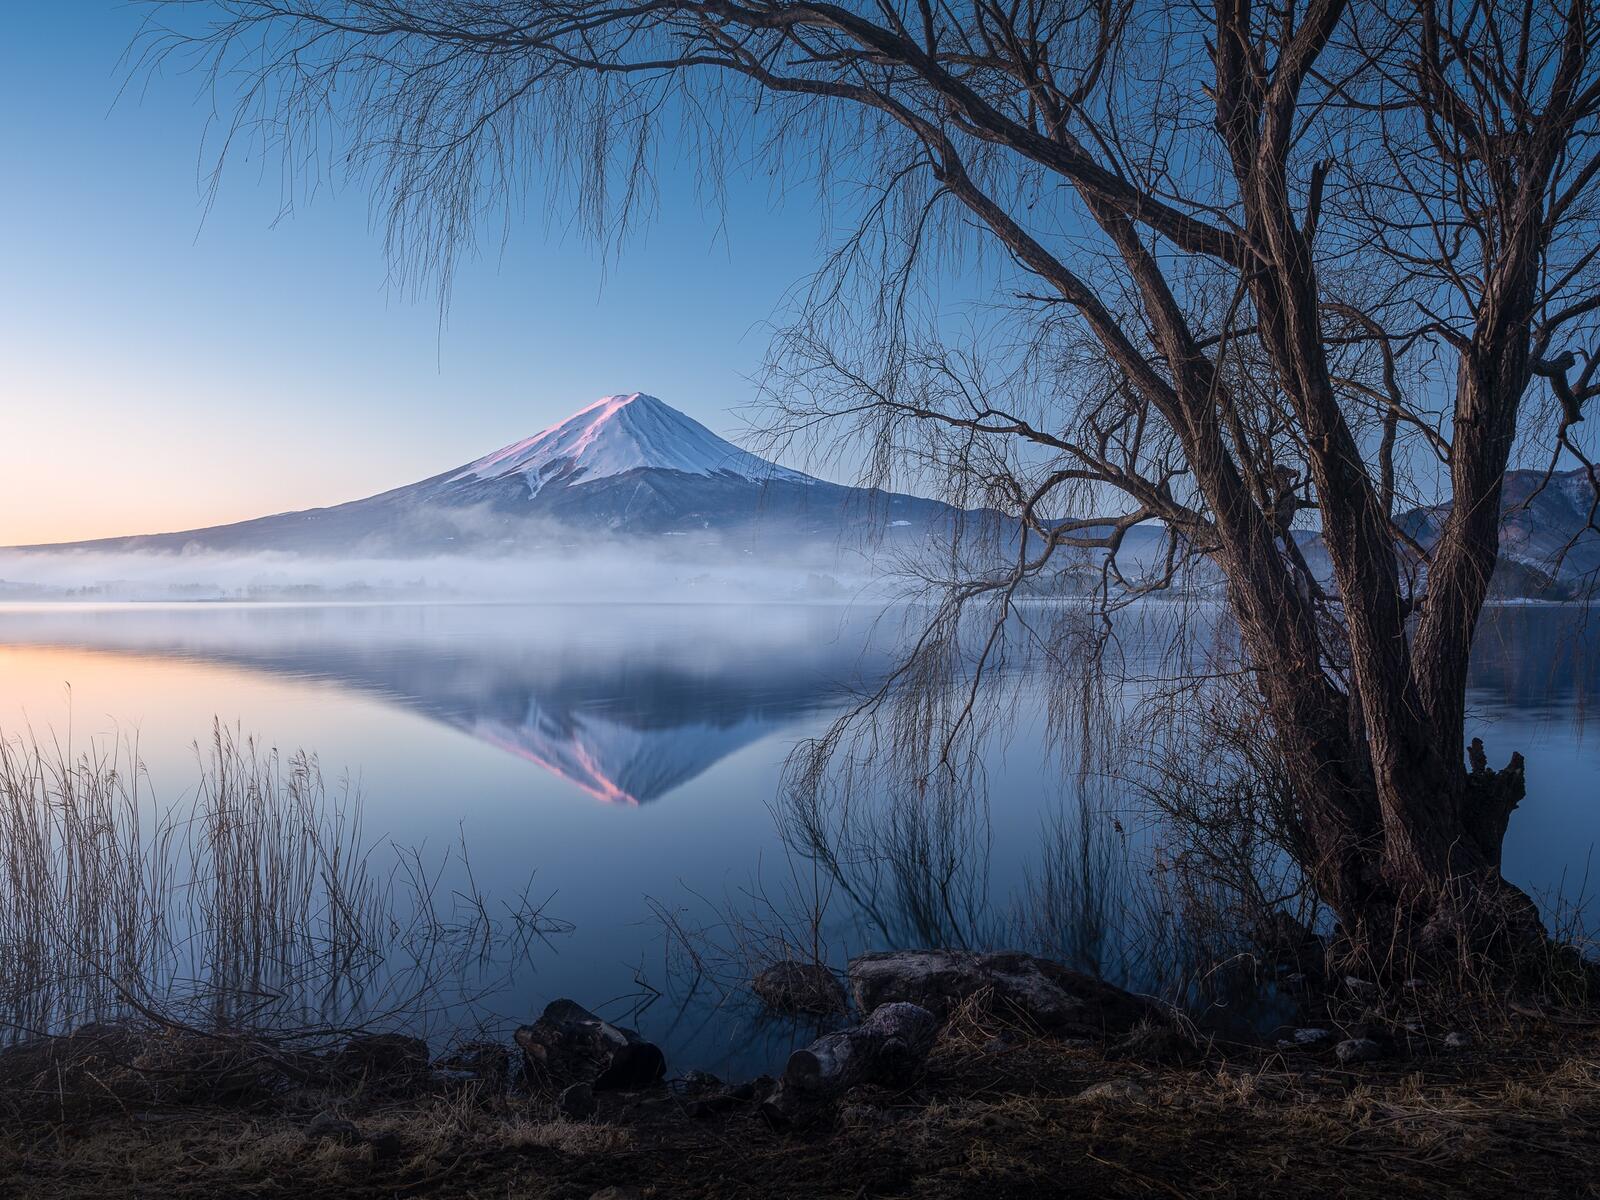 Обои Mount Fuji lake Kawaguchi Yamanashi на рабочий стол